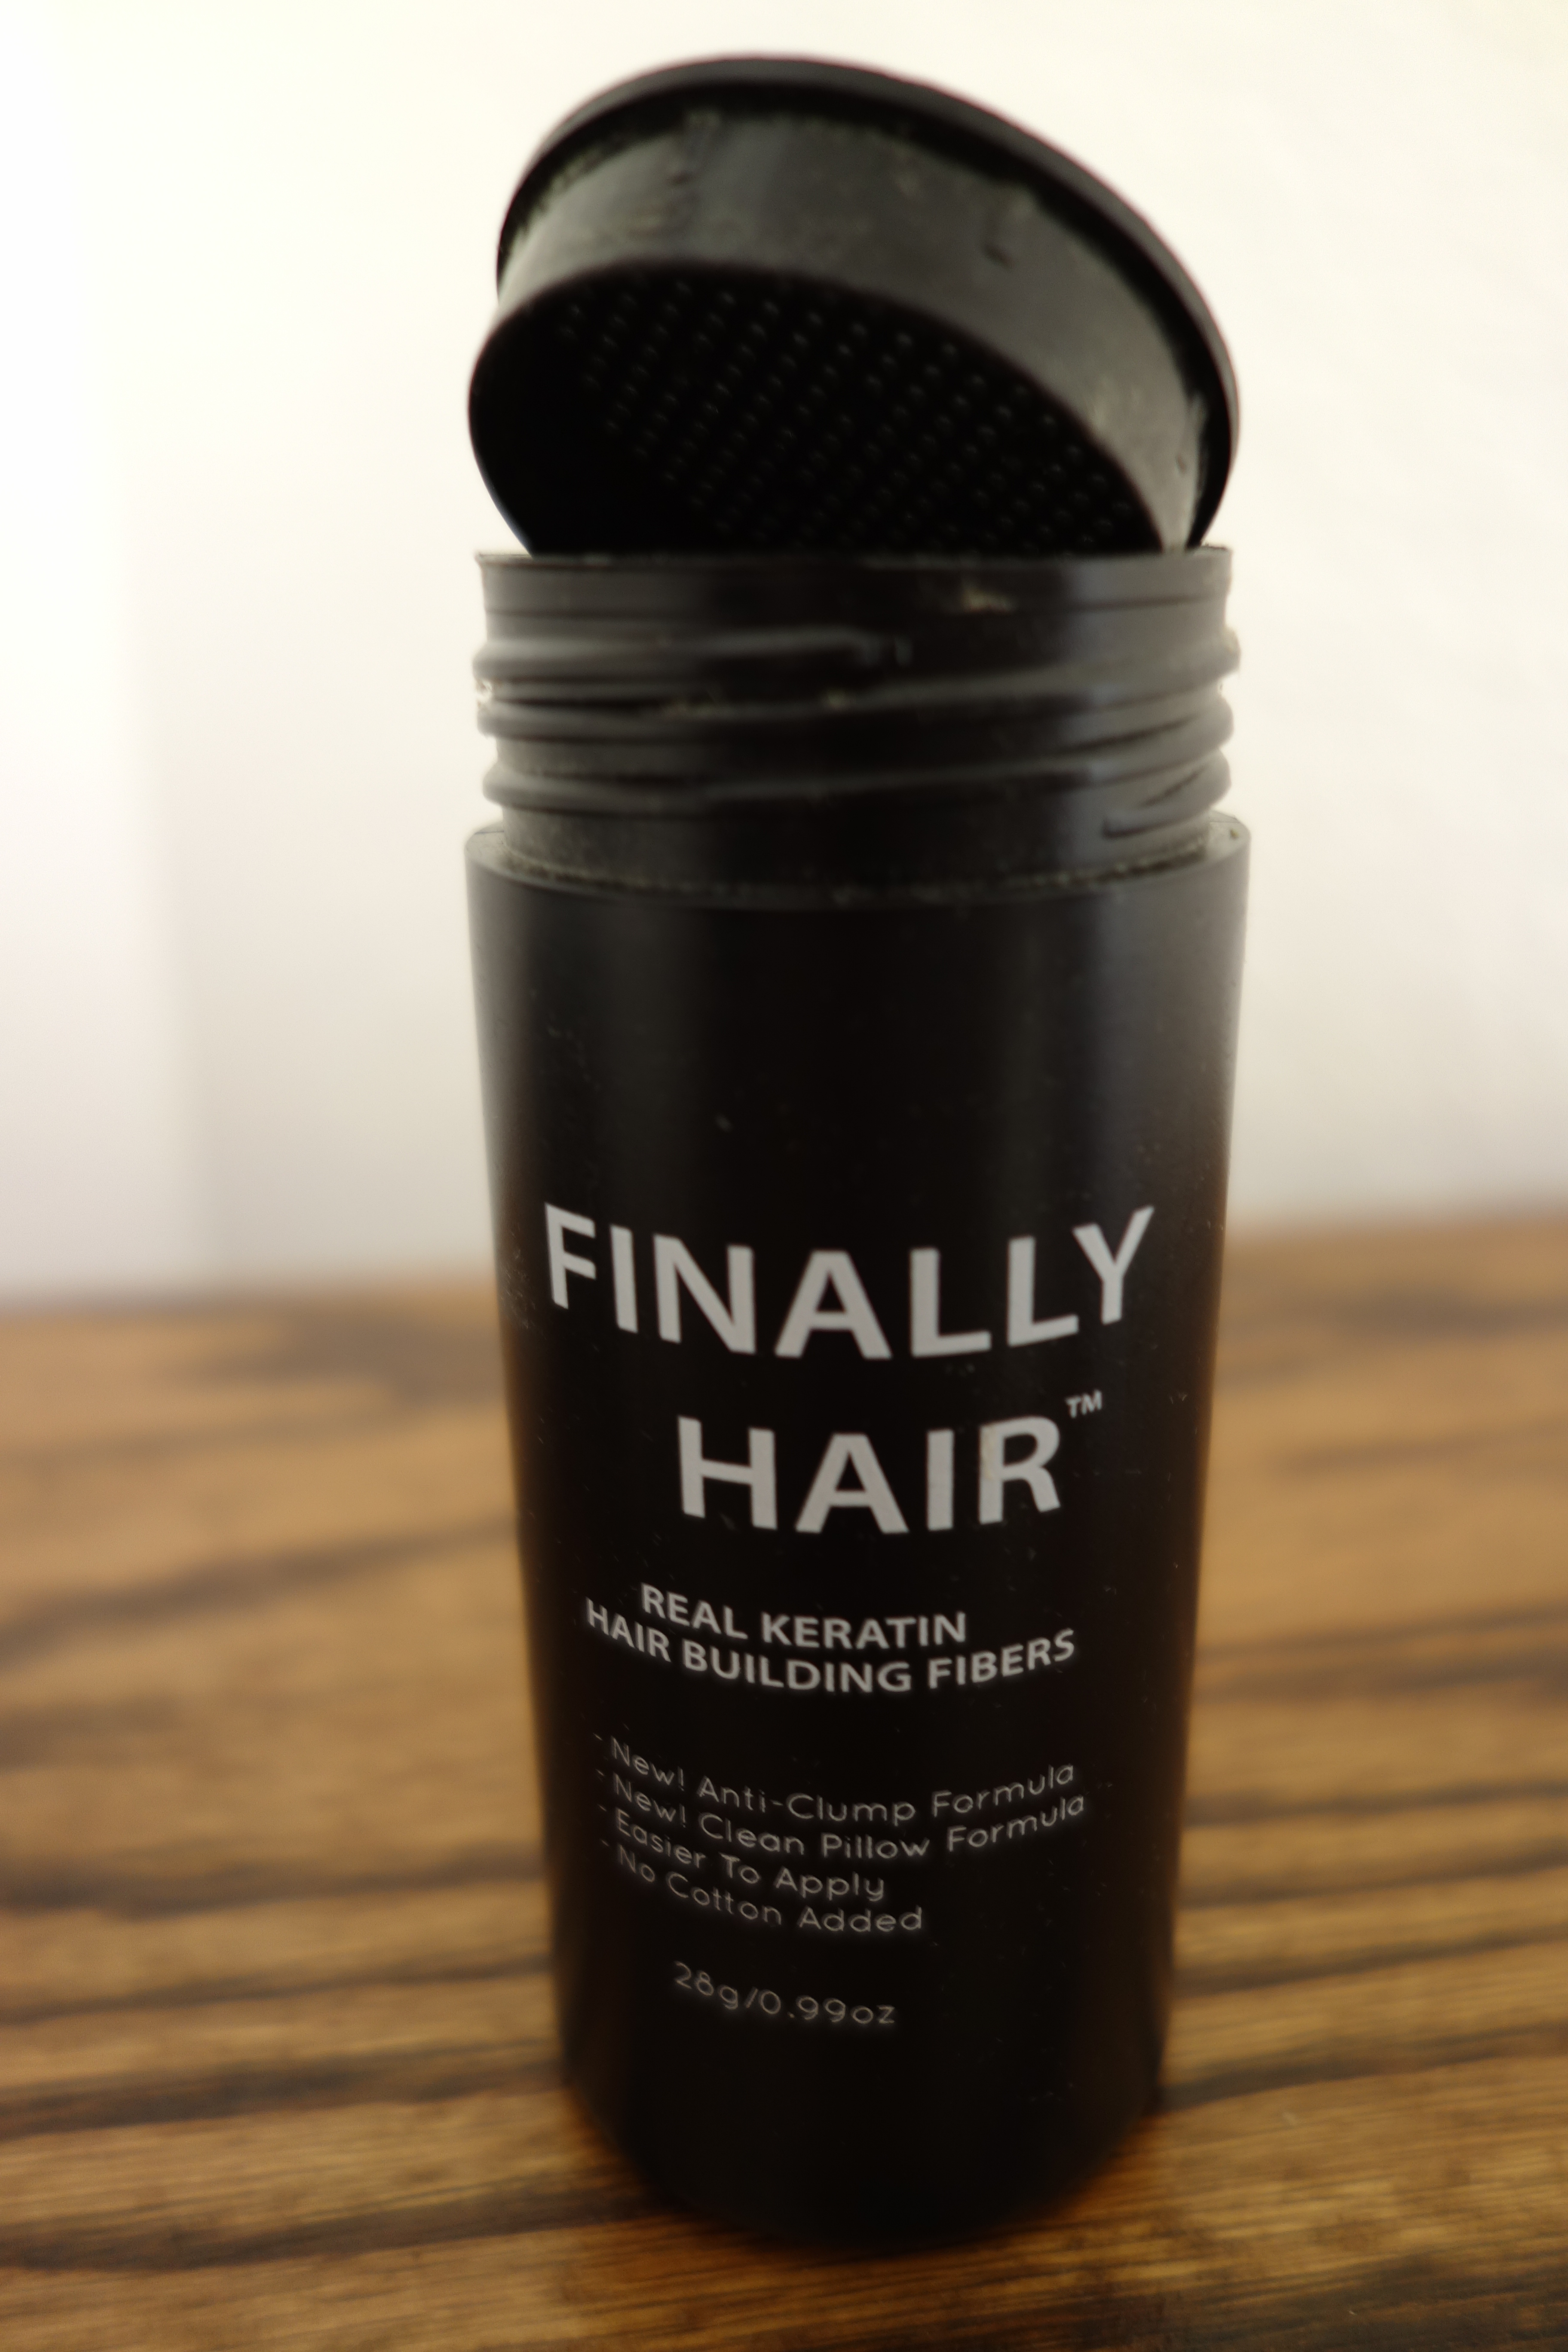 Hair Building Fiber - 25 Gram Hair Loss Filler Fiber Hair Building Fiber -  Finally Hair Medium Brown Fibers. Available in 20 colors. Refill a Toppik,  Xfusion, Caboki bottle. [Hair Building Fiber